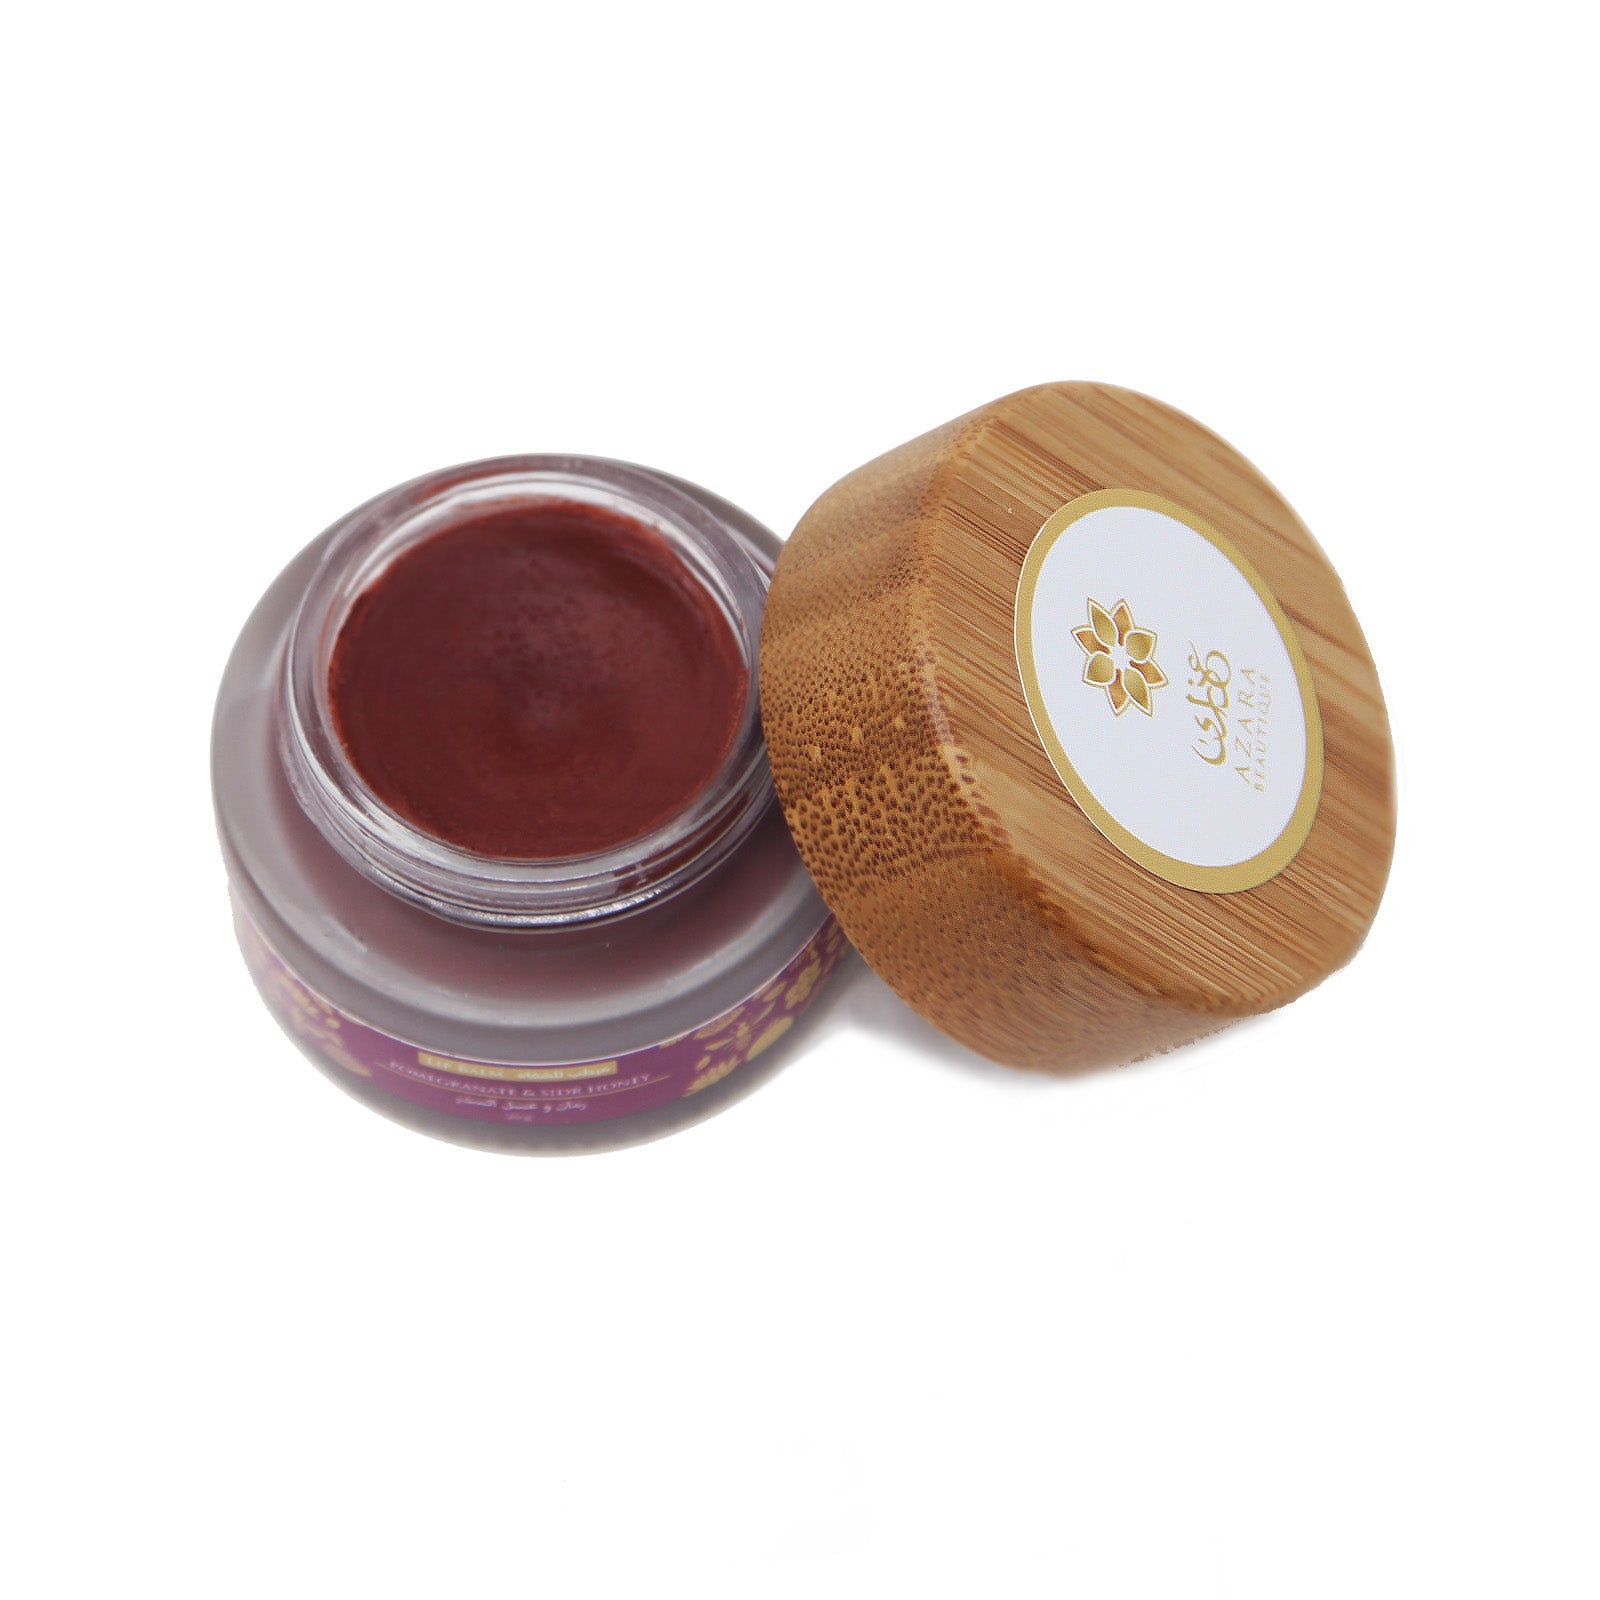 Pomegranate and Sidr Honey Lip Balm - 20g